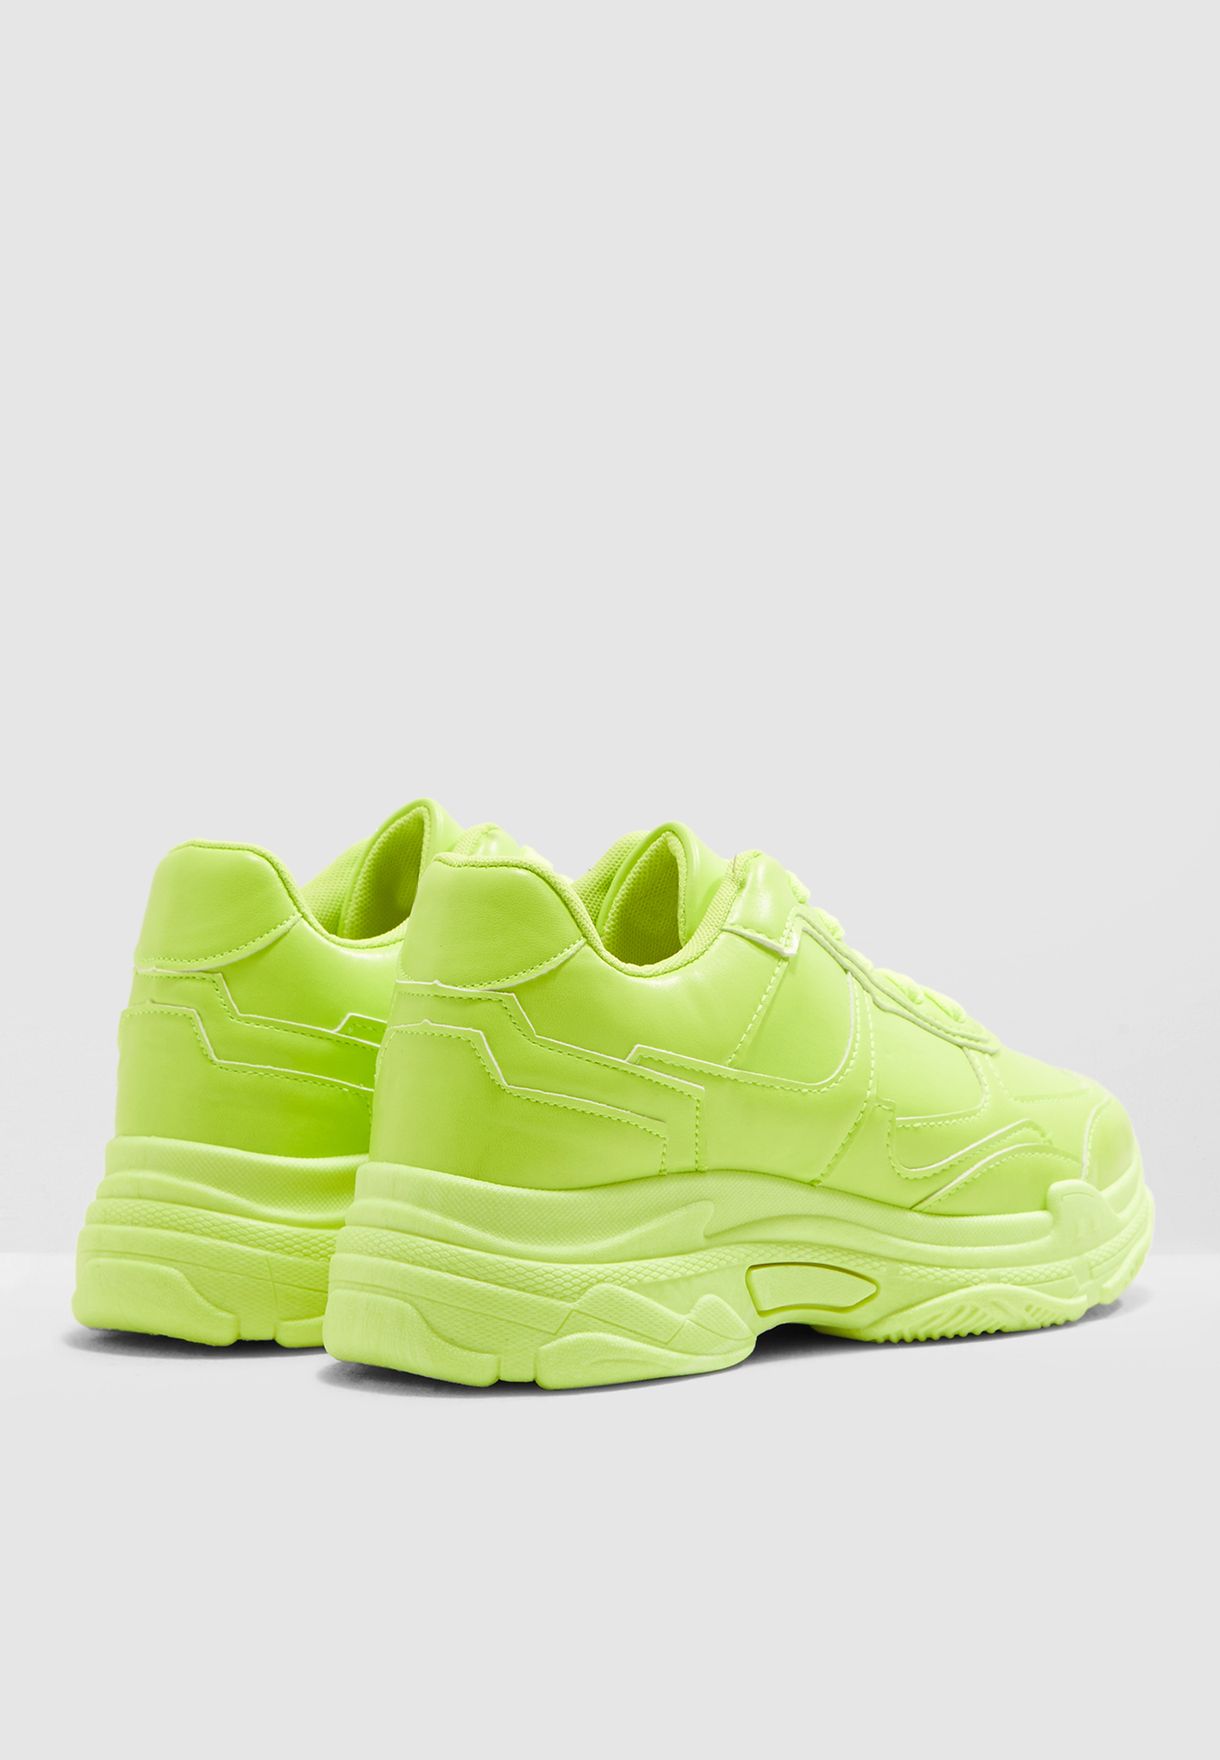 neon dad sneakers